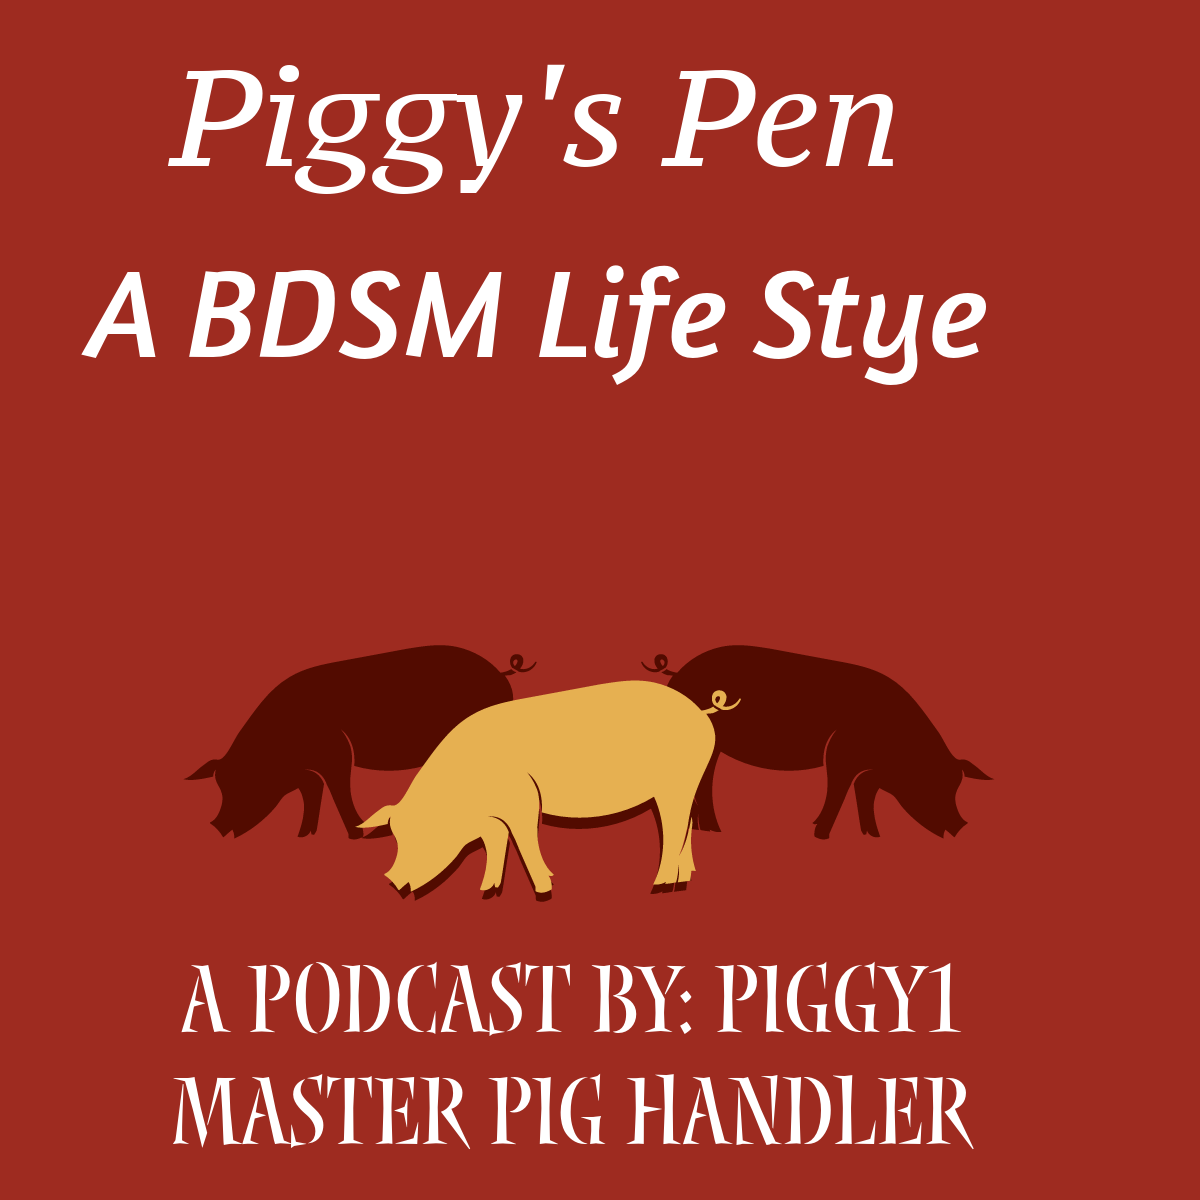 piggy's_pen_a_BDSM_life/podcasts